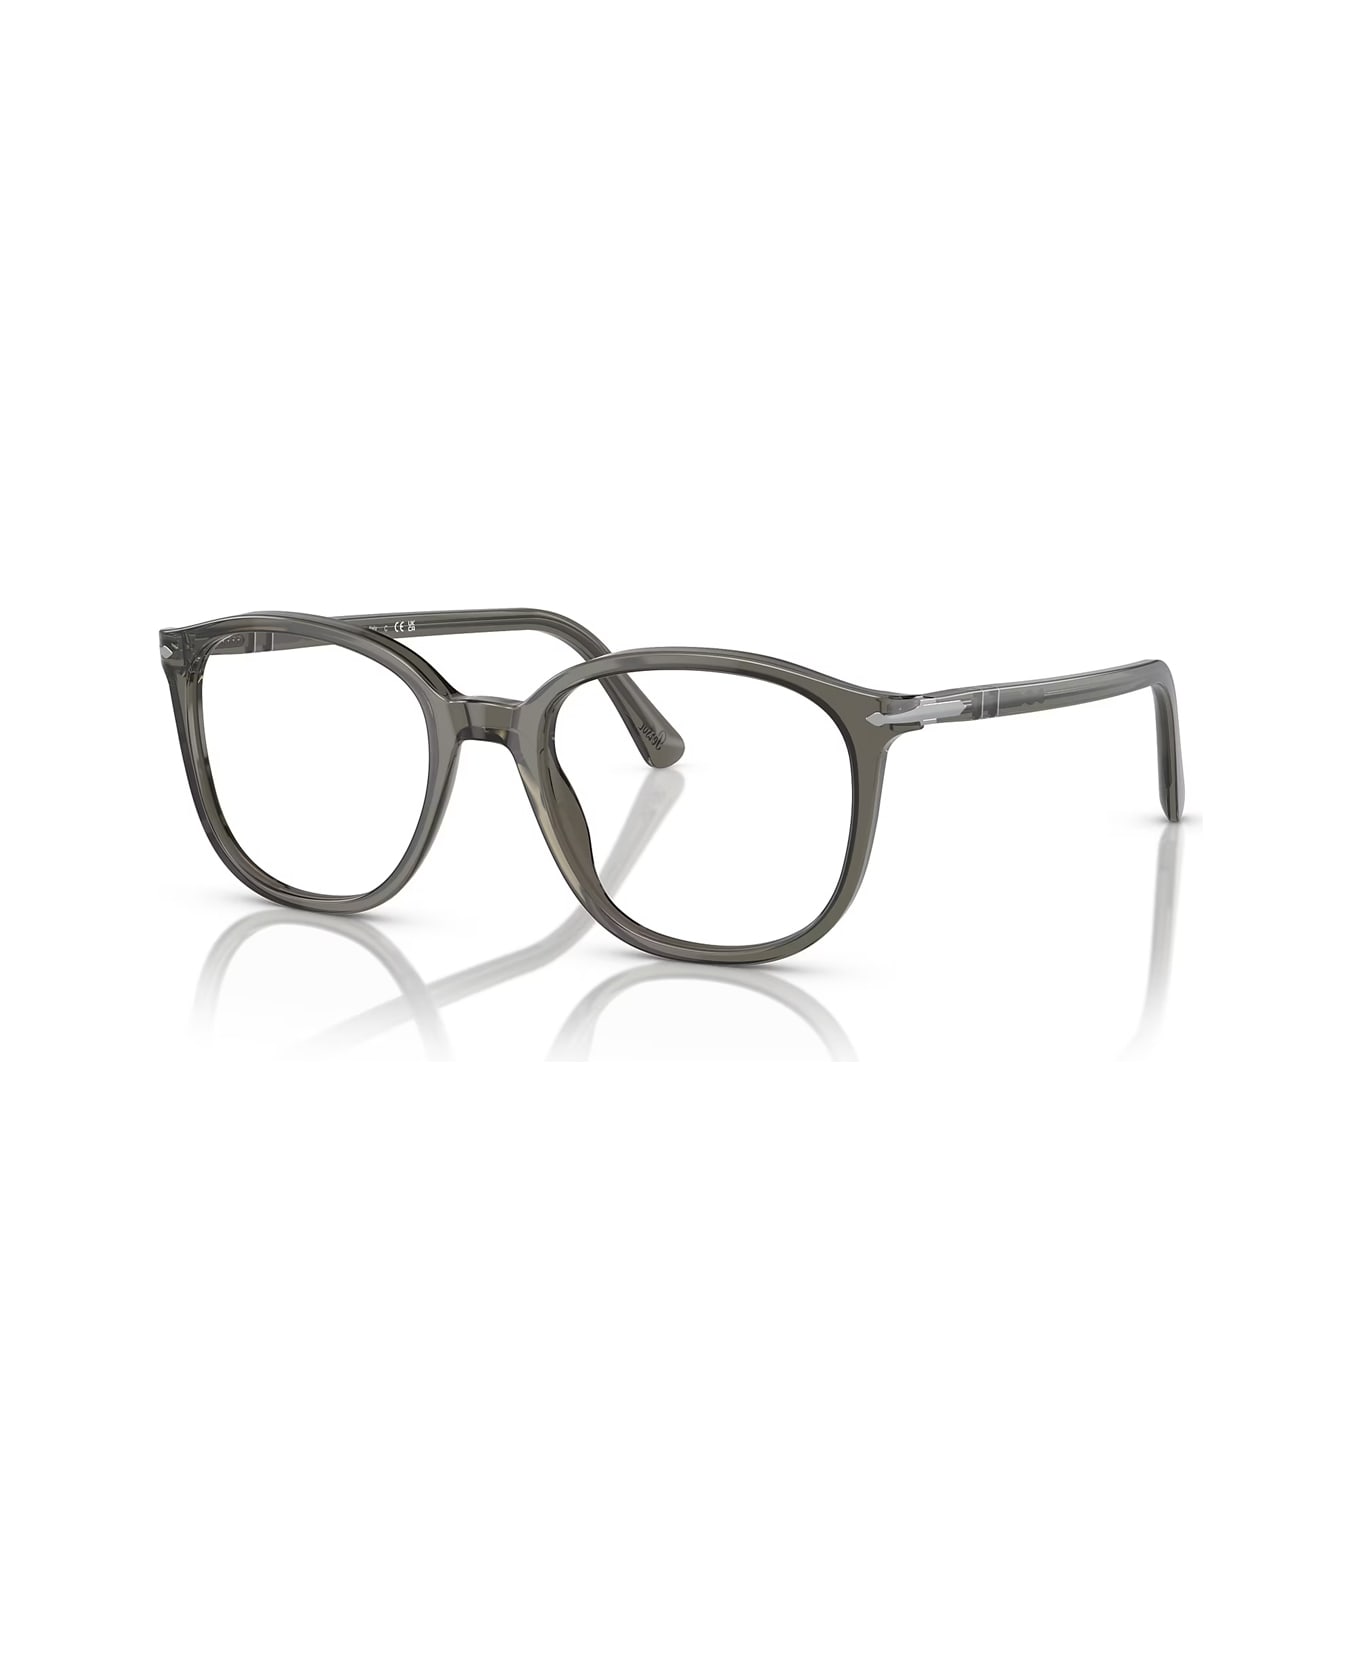 Persol Po3317v 1103 Glasses - Grigio アイウェア